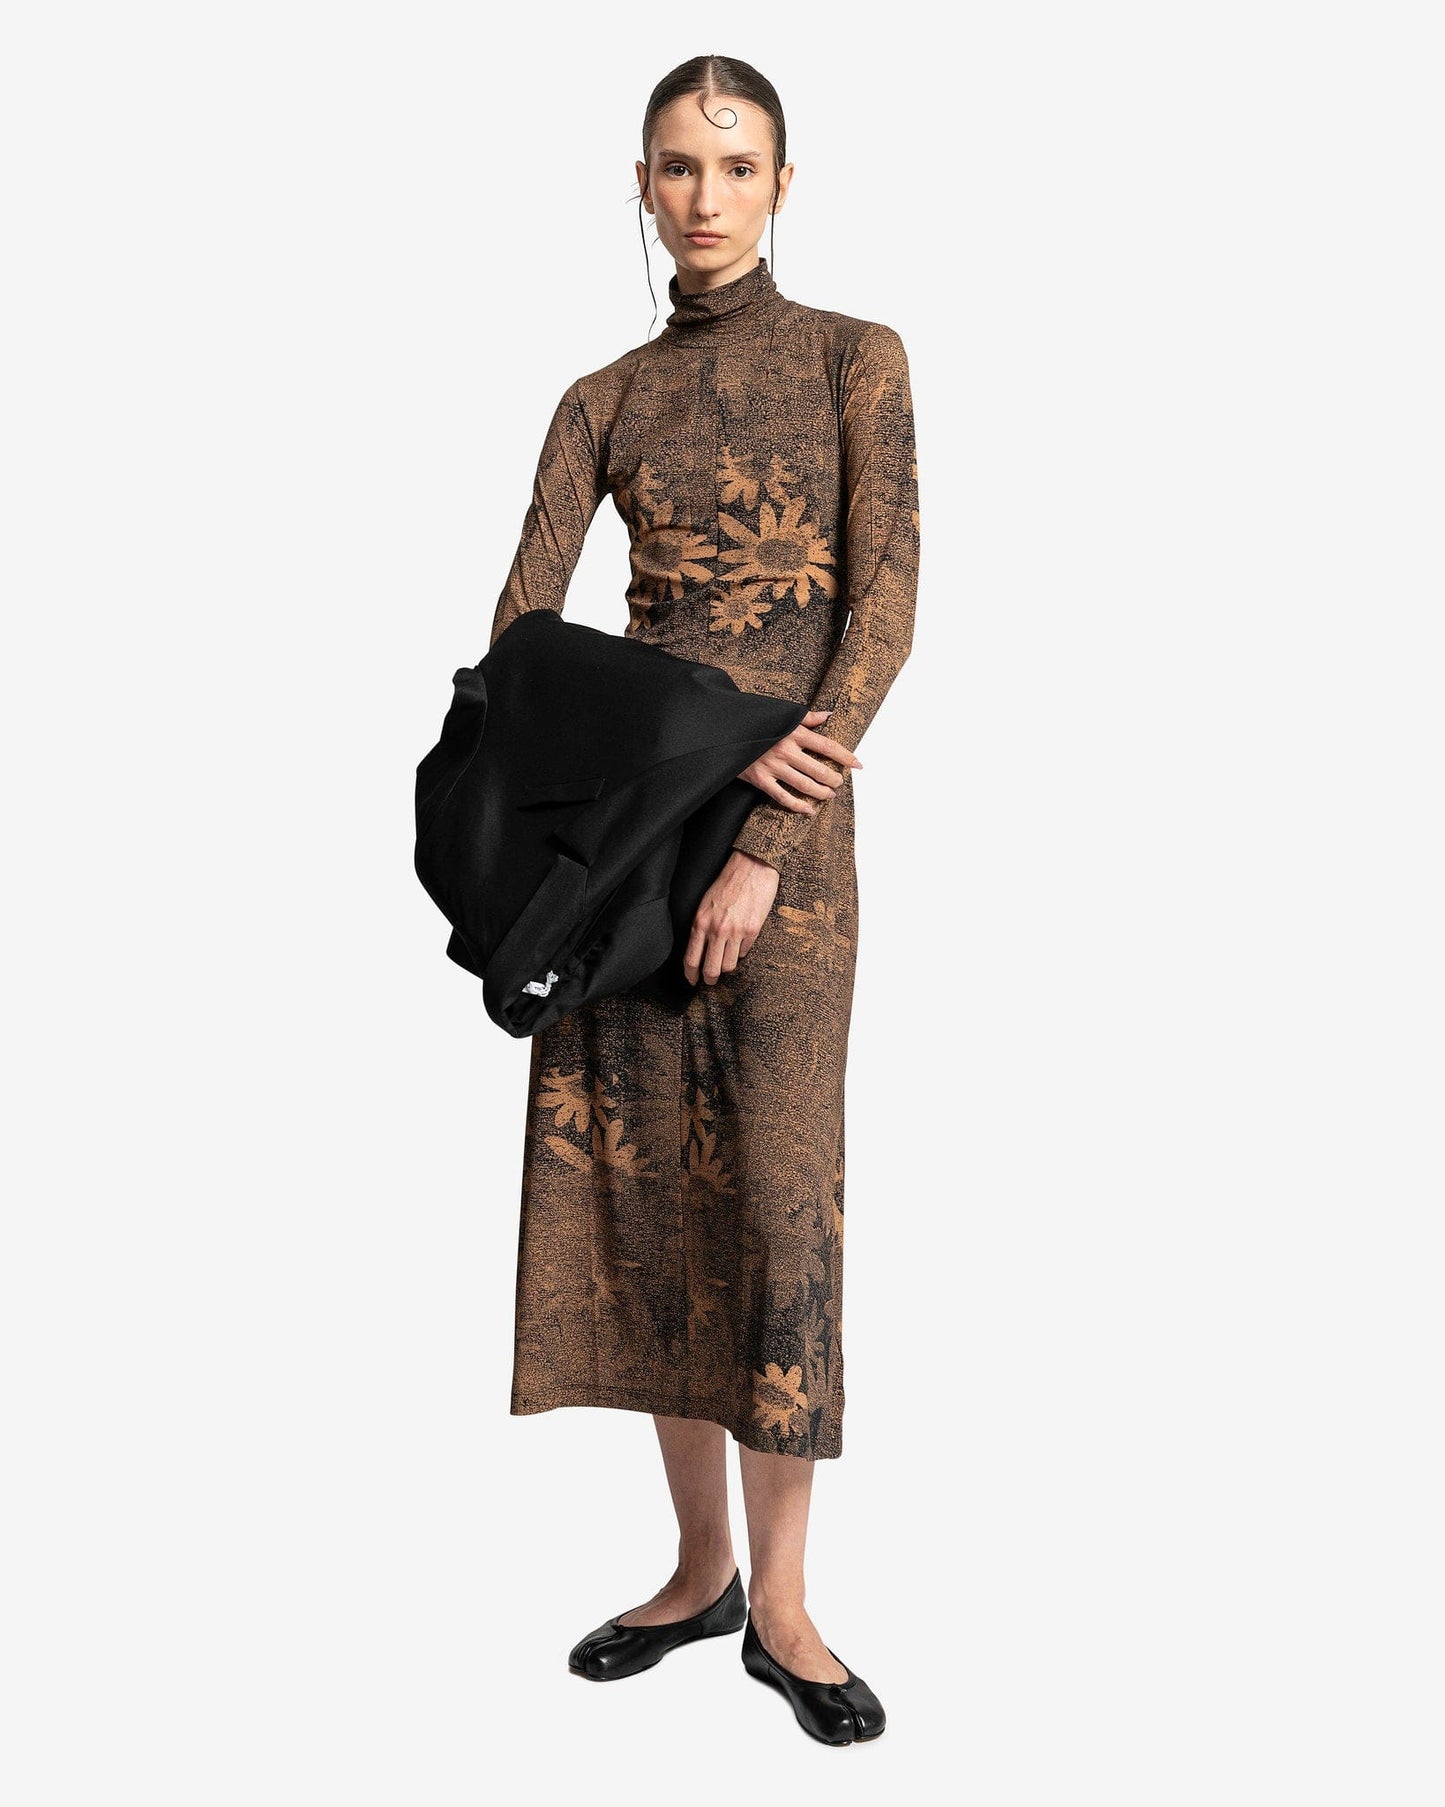 MM6 Maison Margiela Women Dresses Floral Print Dress in Tan/Black